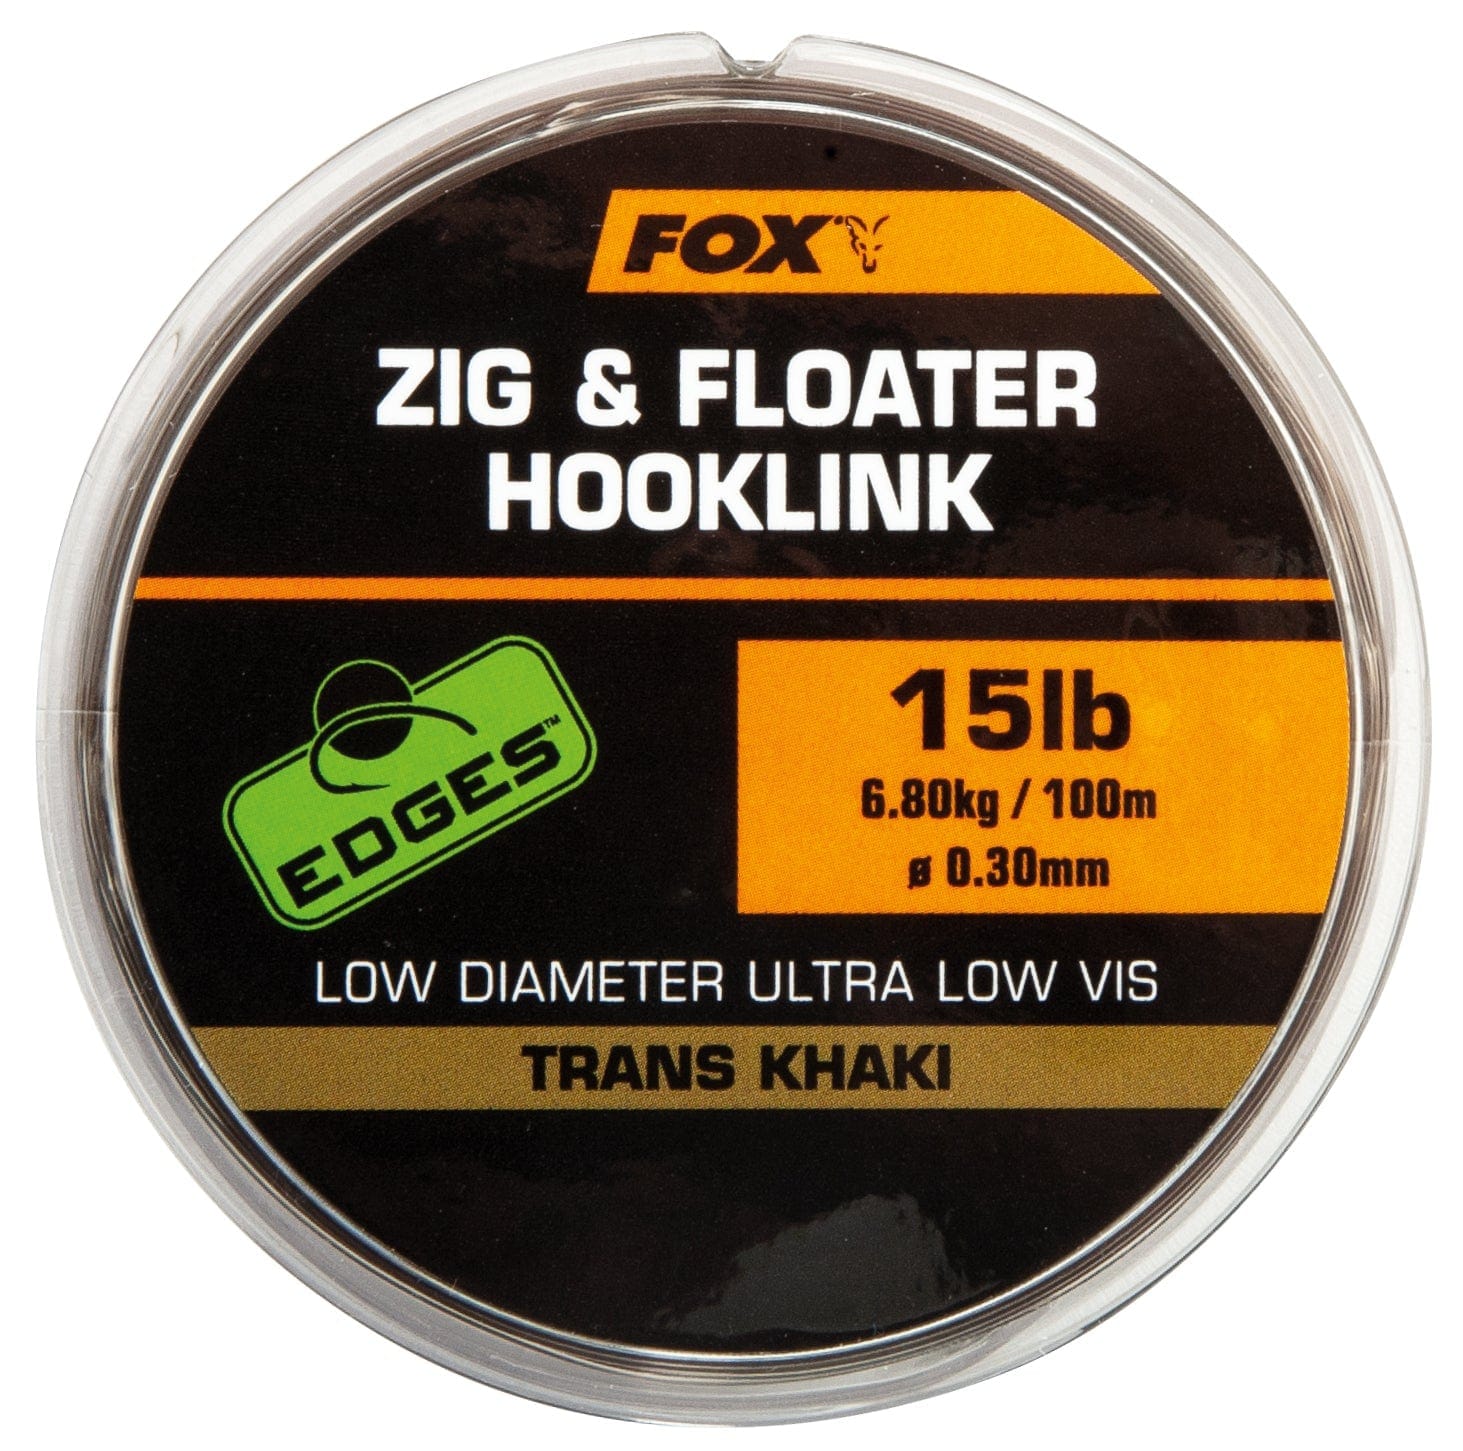 FOX Zig & Floater Hooklink Trans Khaki.